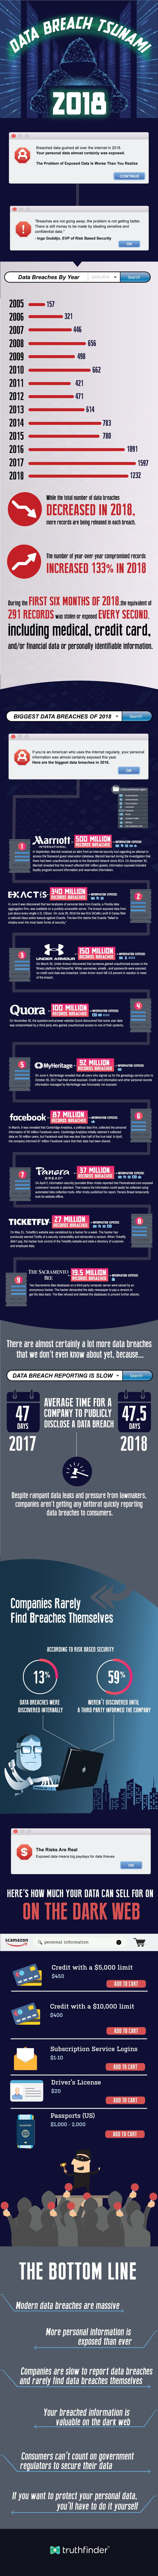 Data Breach Tsunami 2018 Infographic